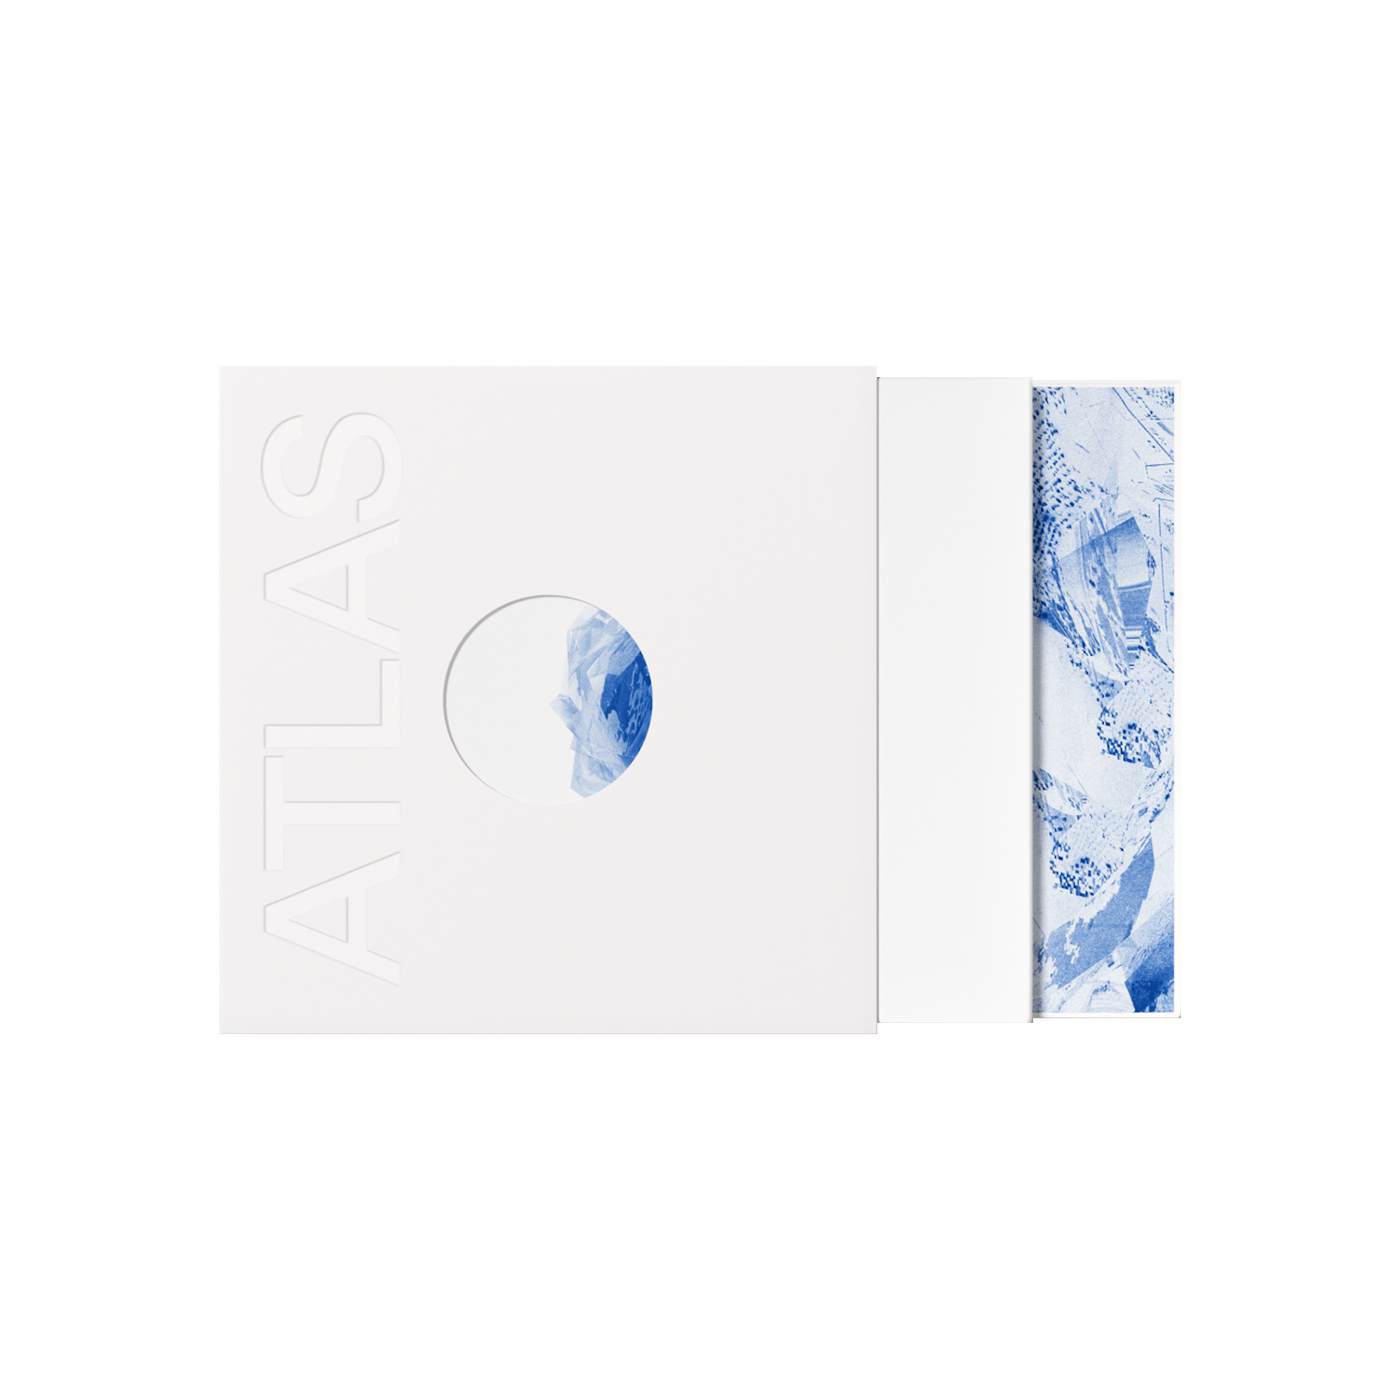 RÜFÜS DU SOL Atlas 10 Year Anniversary Limited Edition Box Set